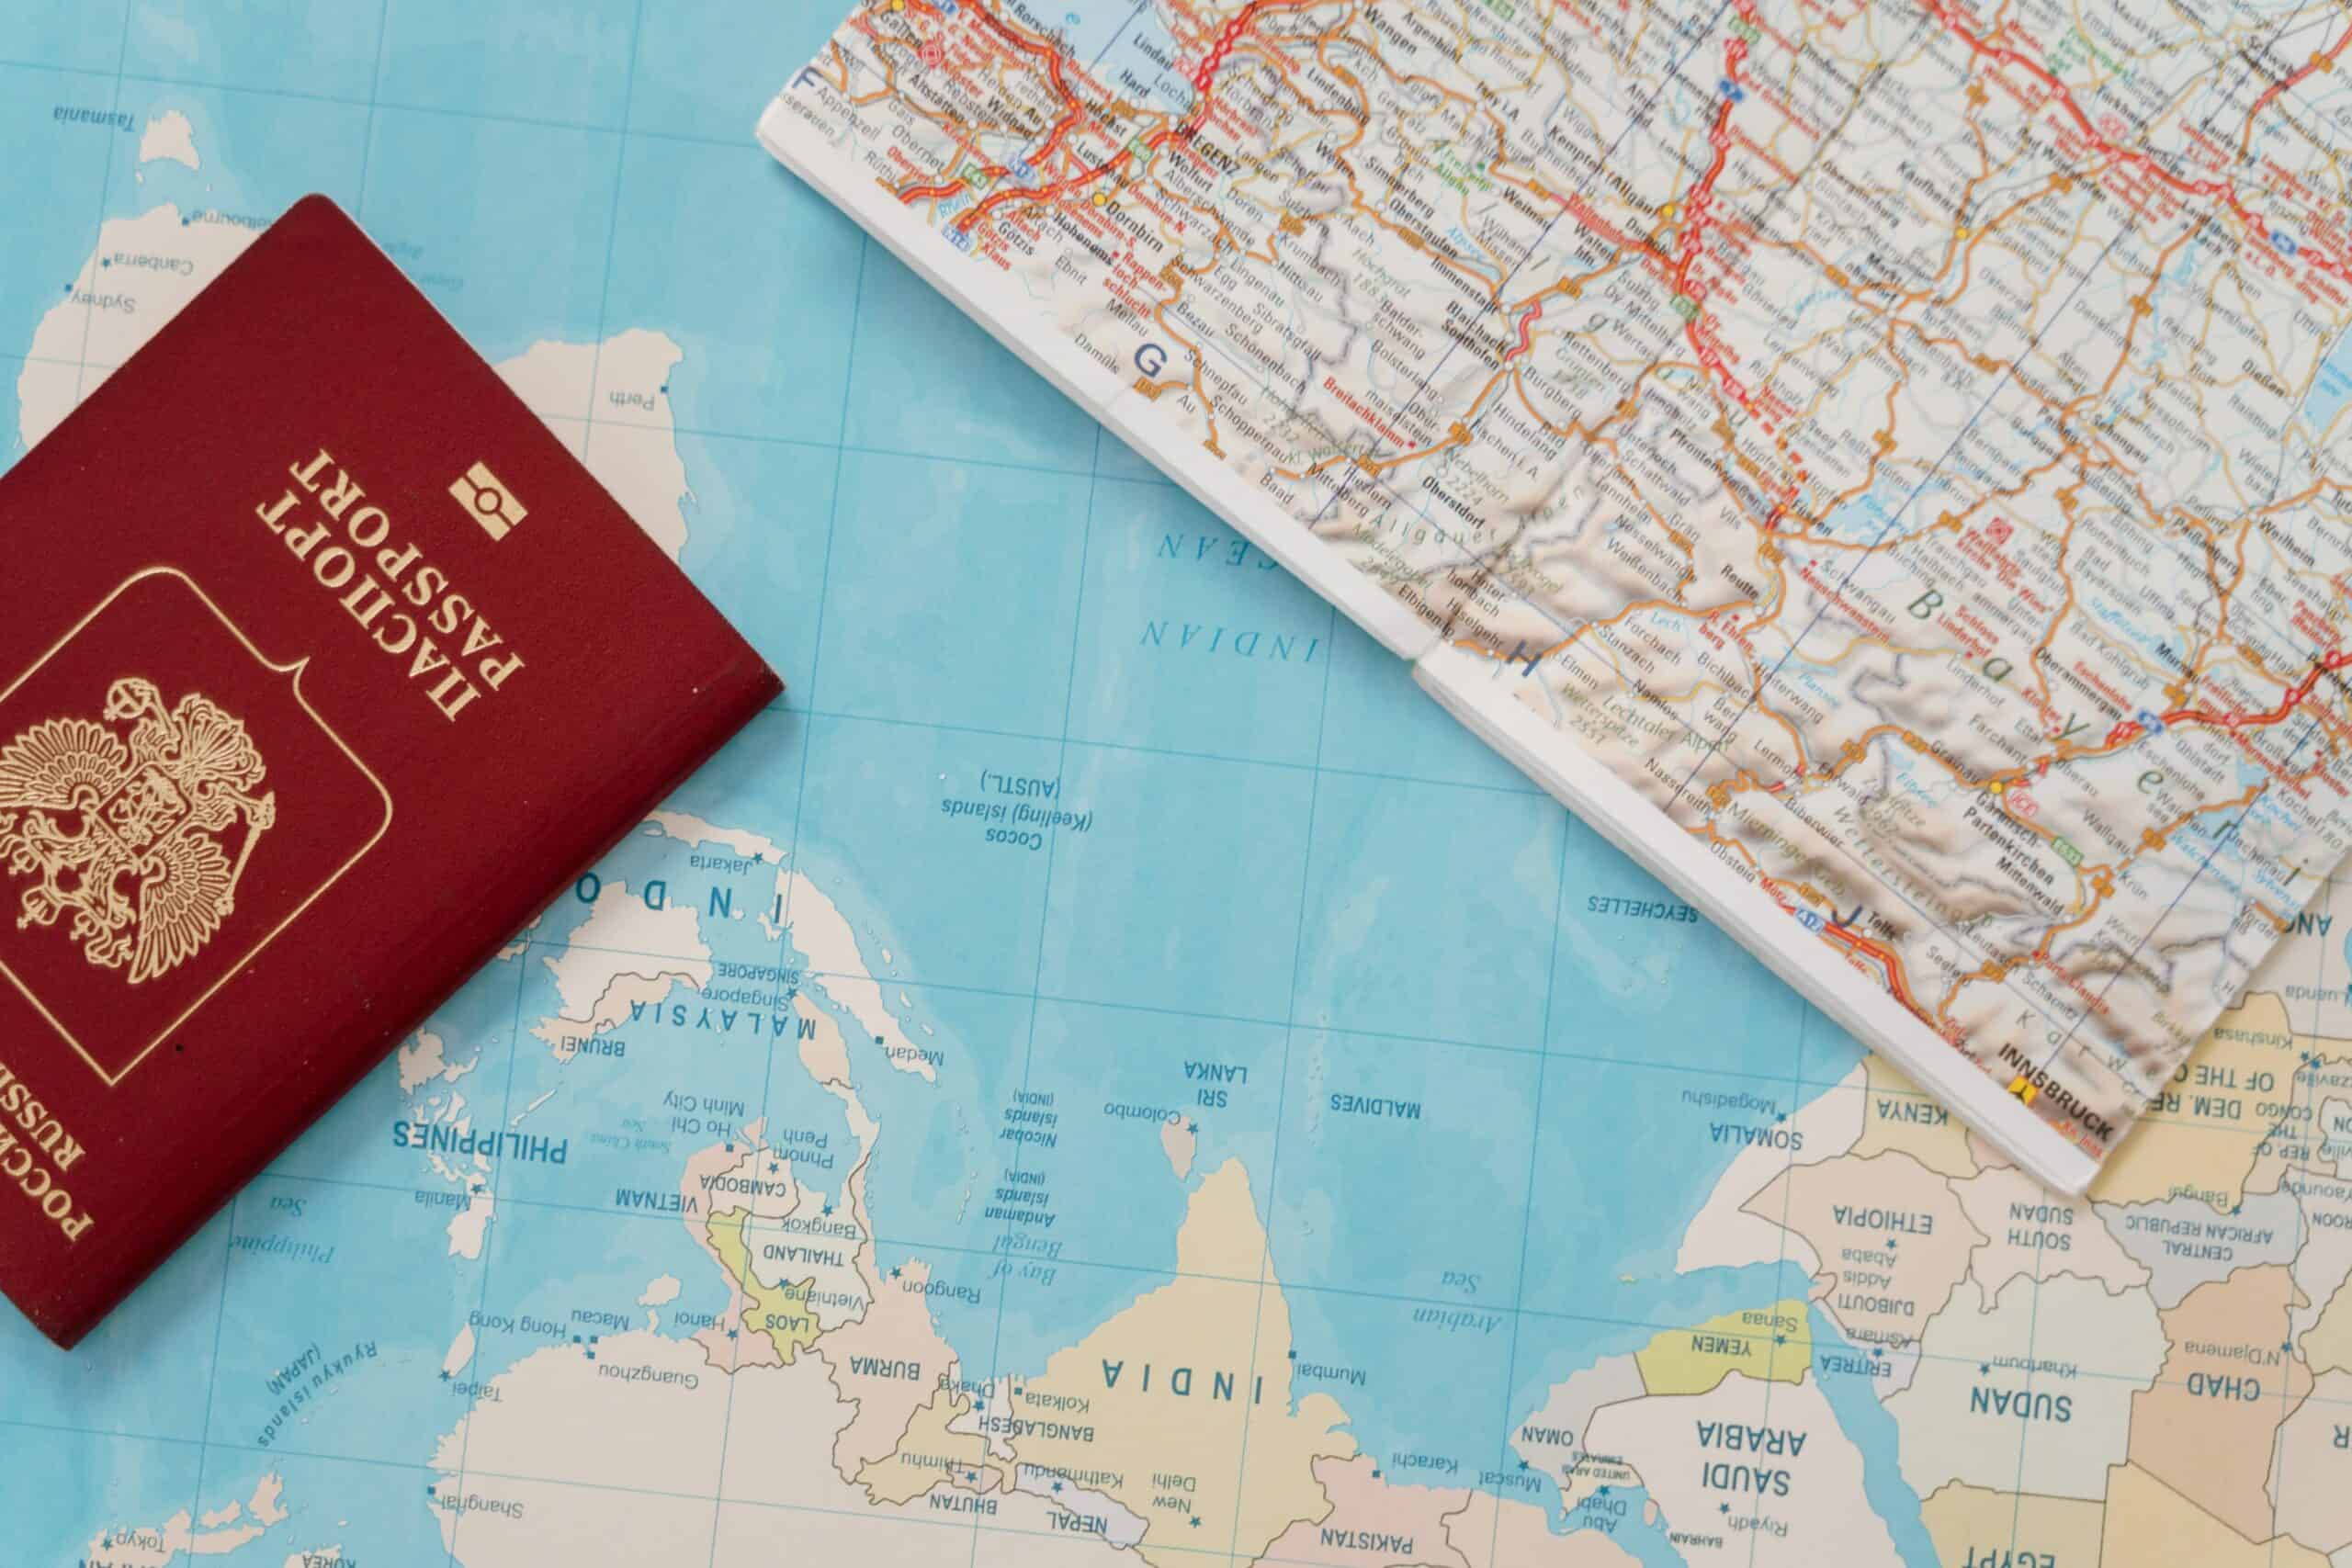 passport expiry travel to cuba